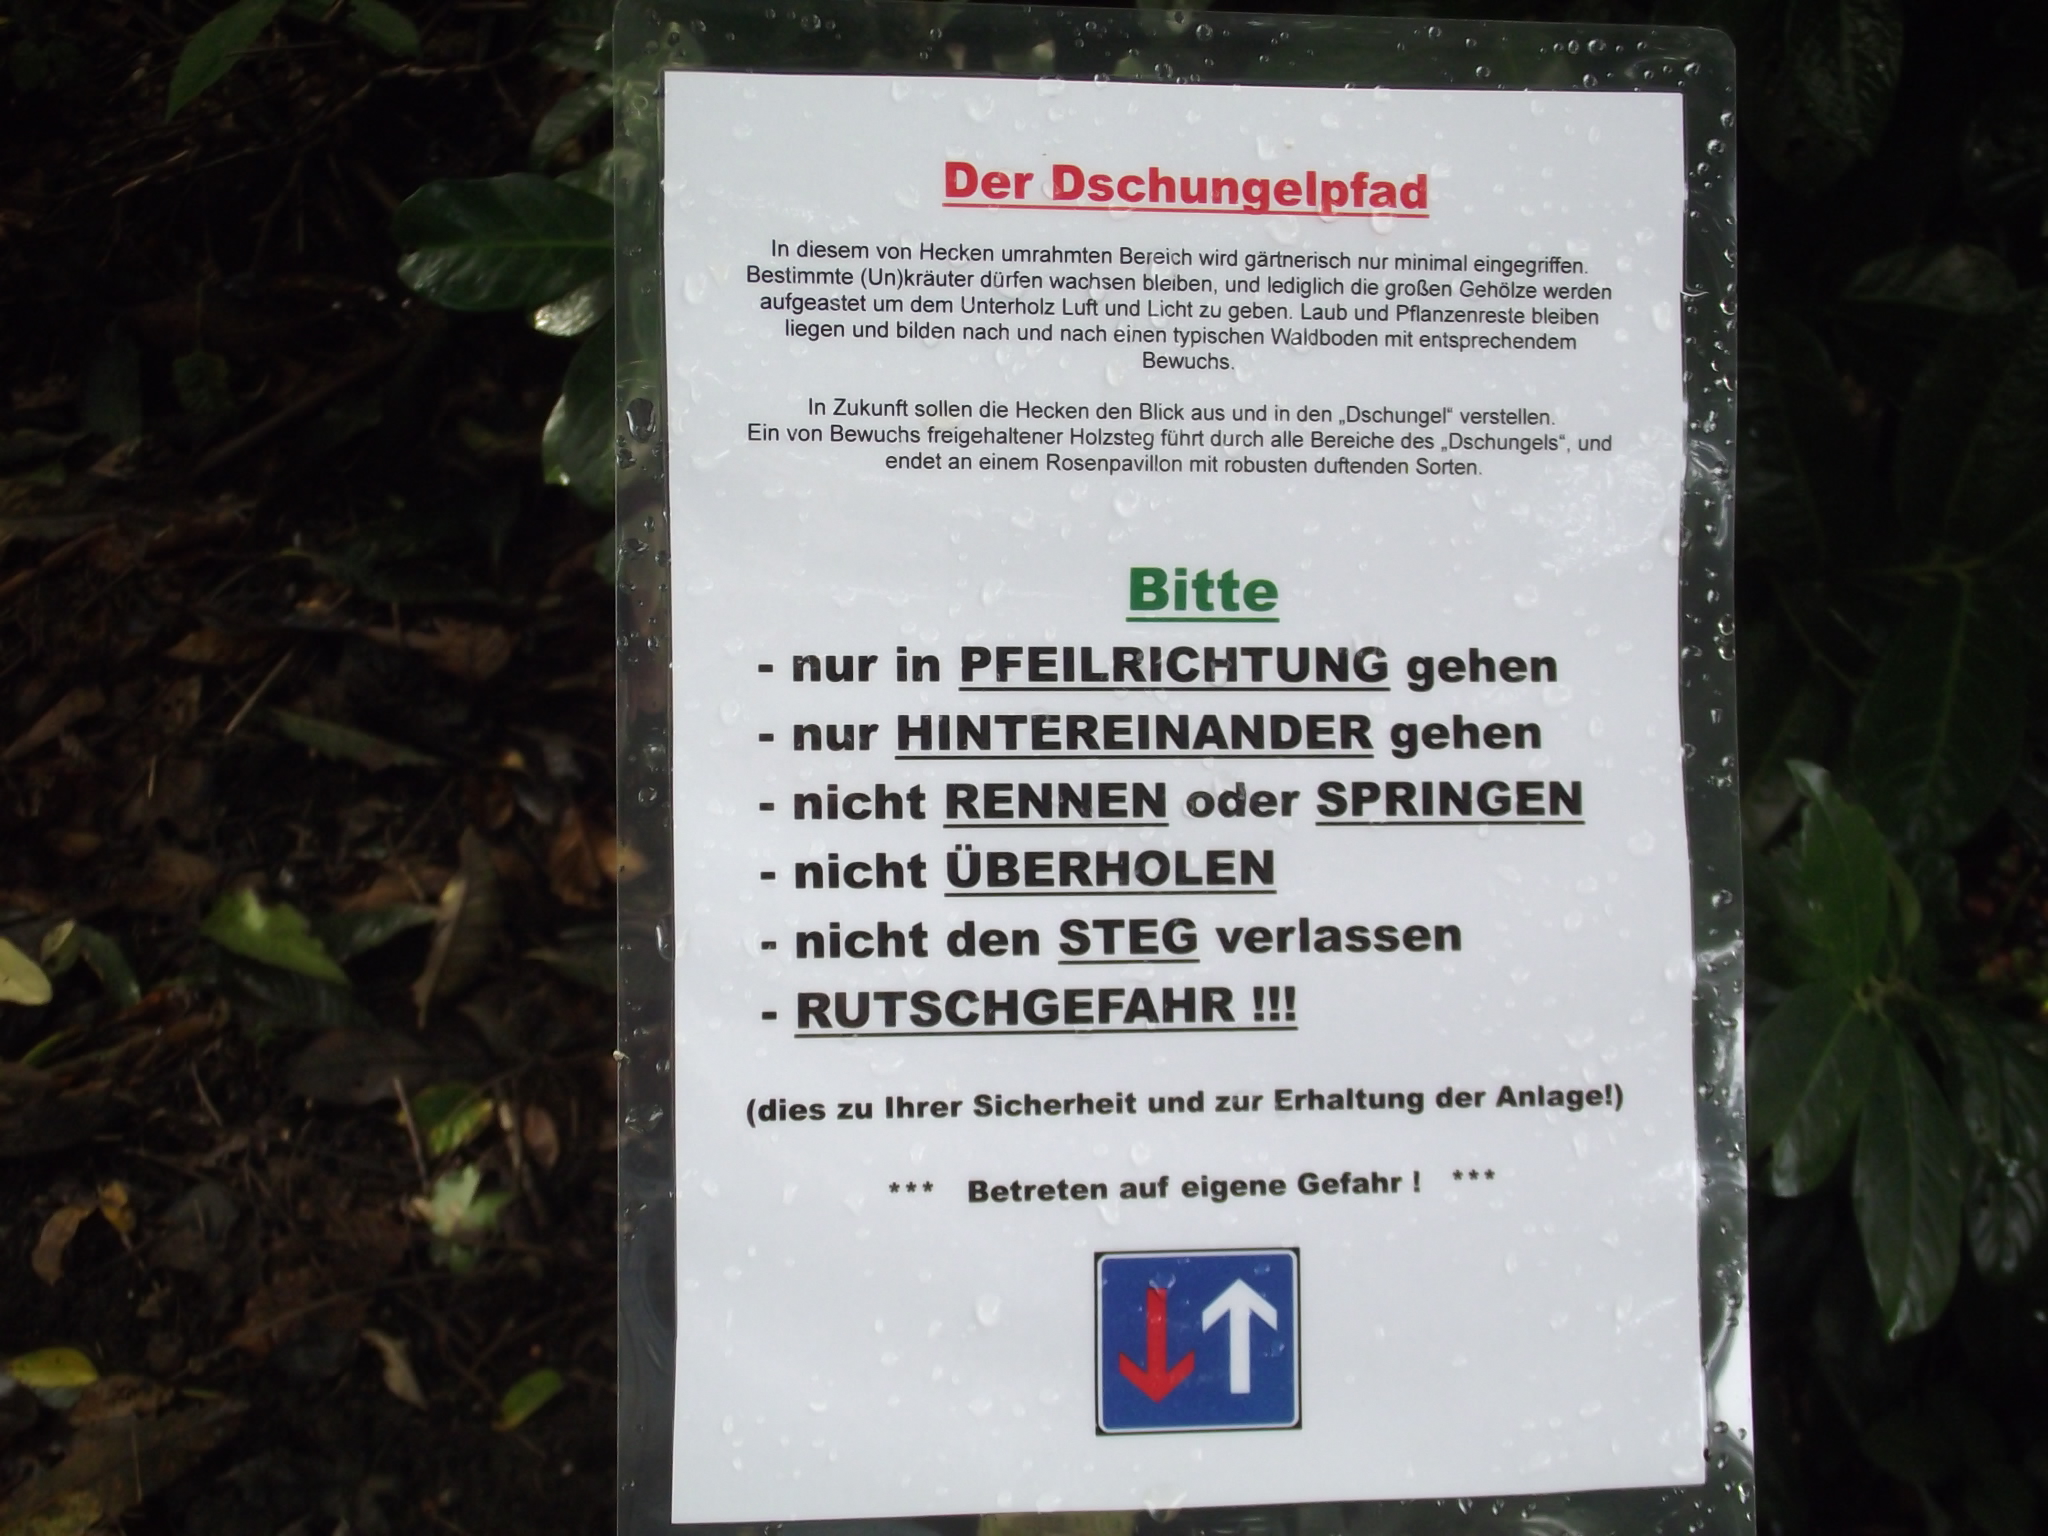 Location Nr 9 Das &quot;ARBORETUM in Neuenkoop/Berne&quot; - Info zum Dschungel-Pfad